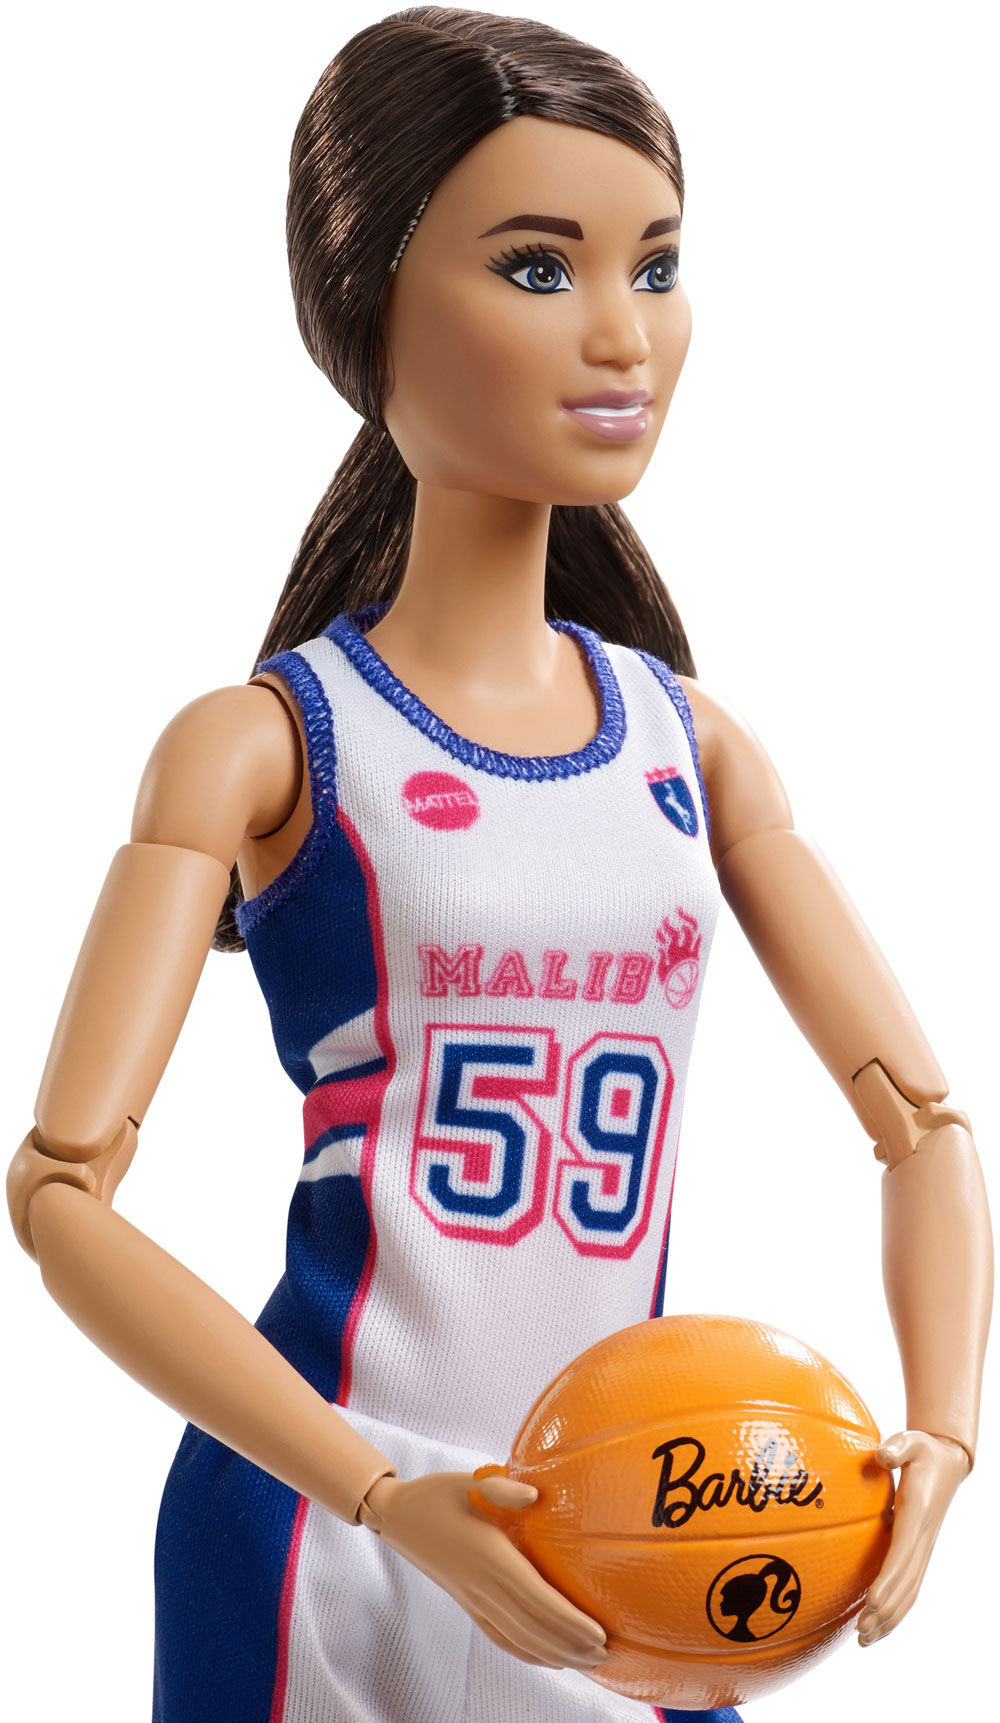 basketball barbie